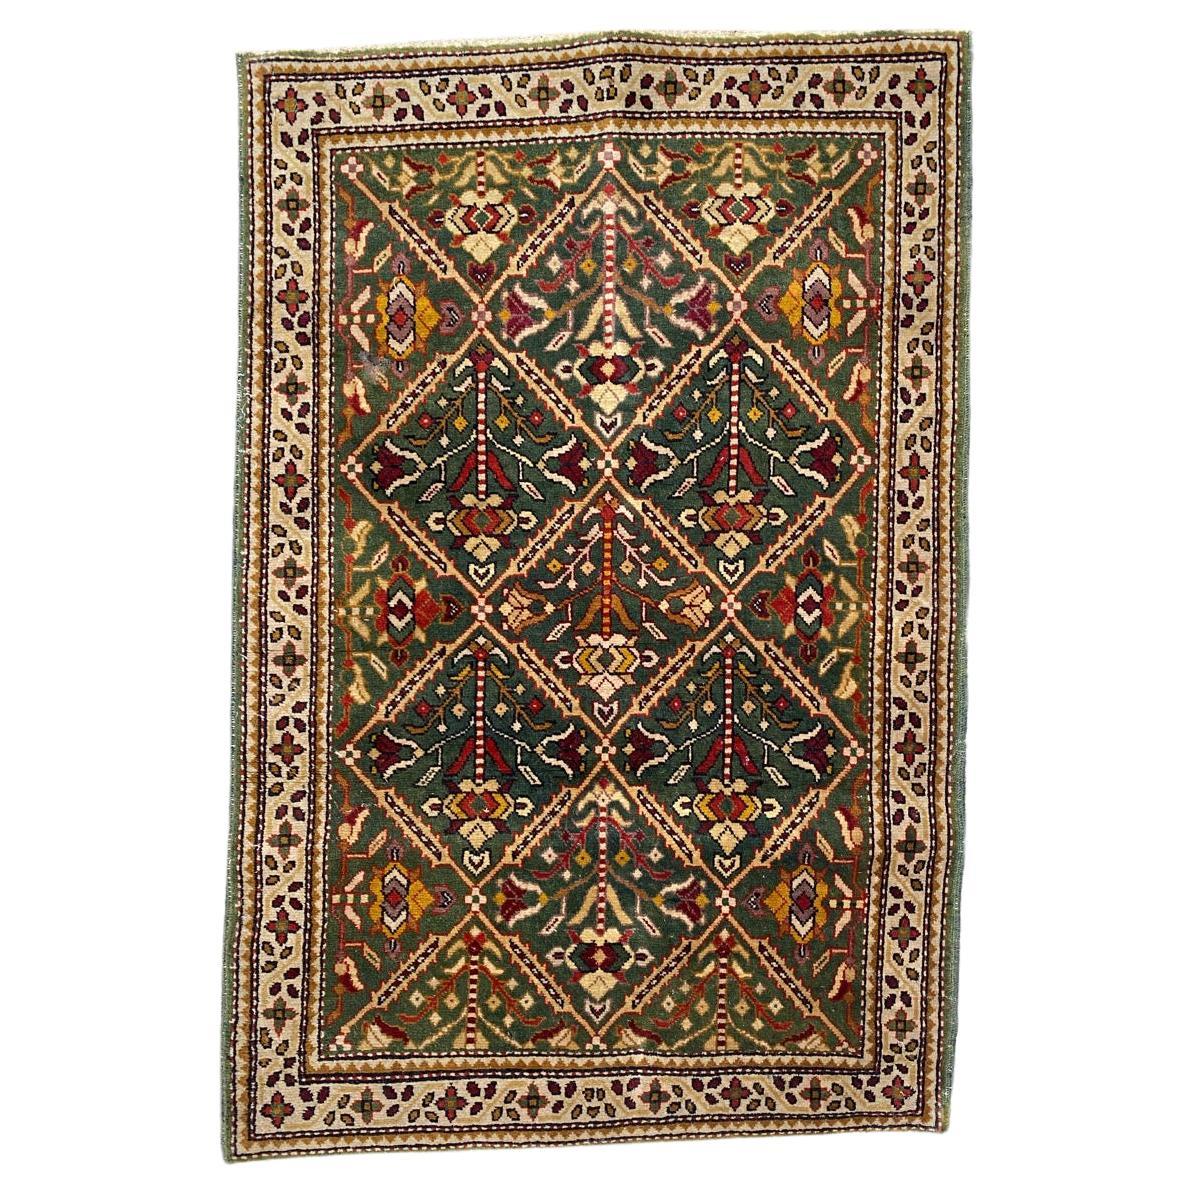 Le petit tapis vintage Shirwan de Bobyrug